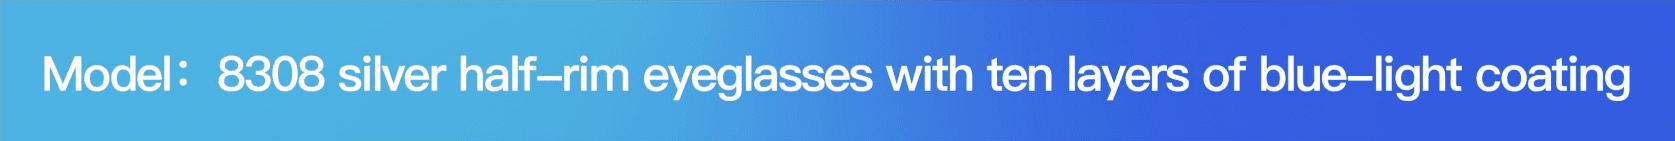 reading glasses model 8308 silver half rim eyeglasses with ten layers of blue light coating